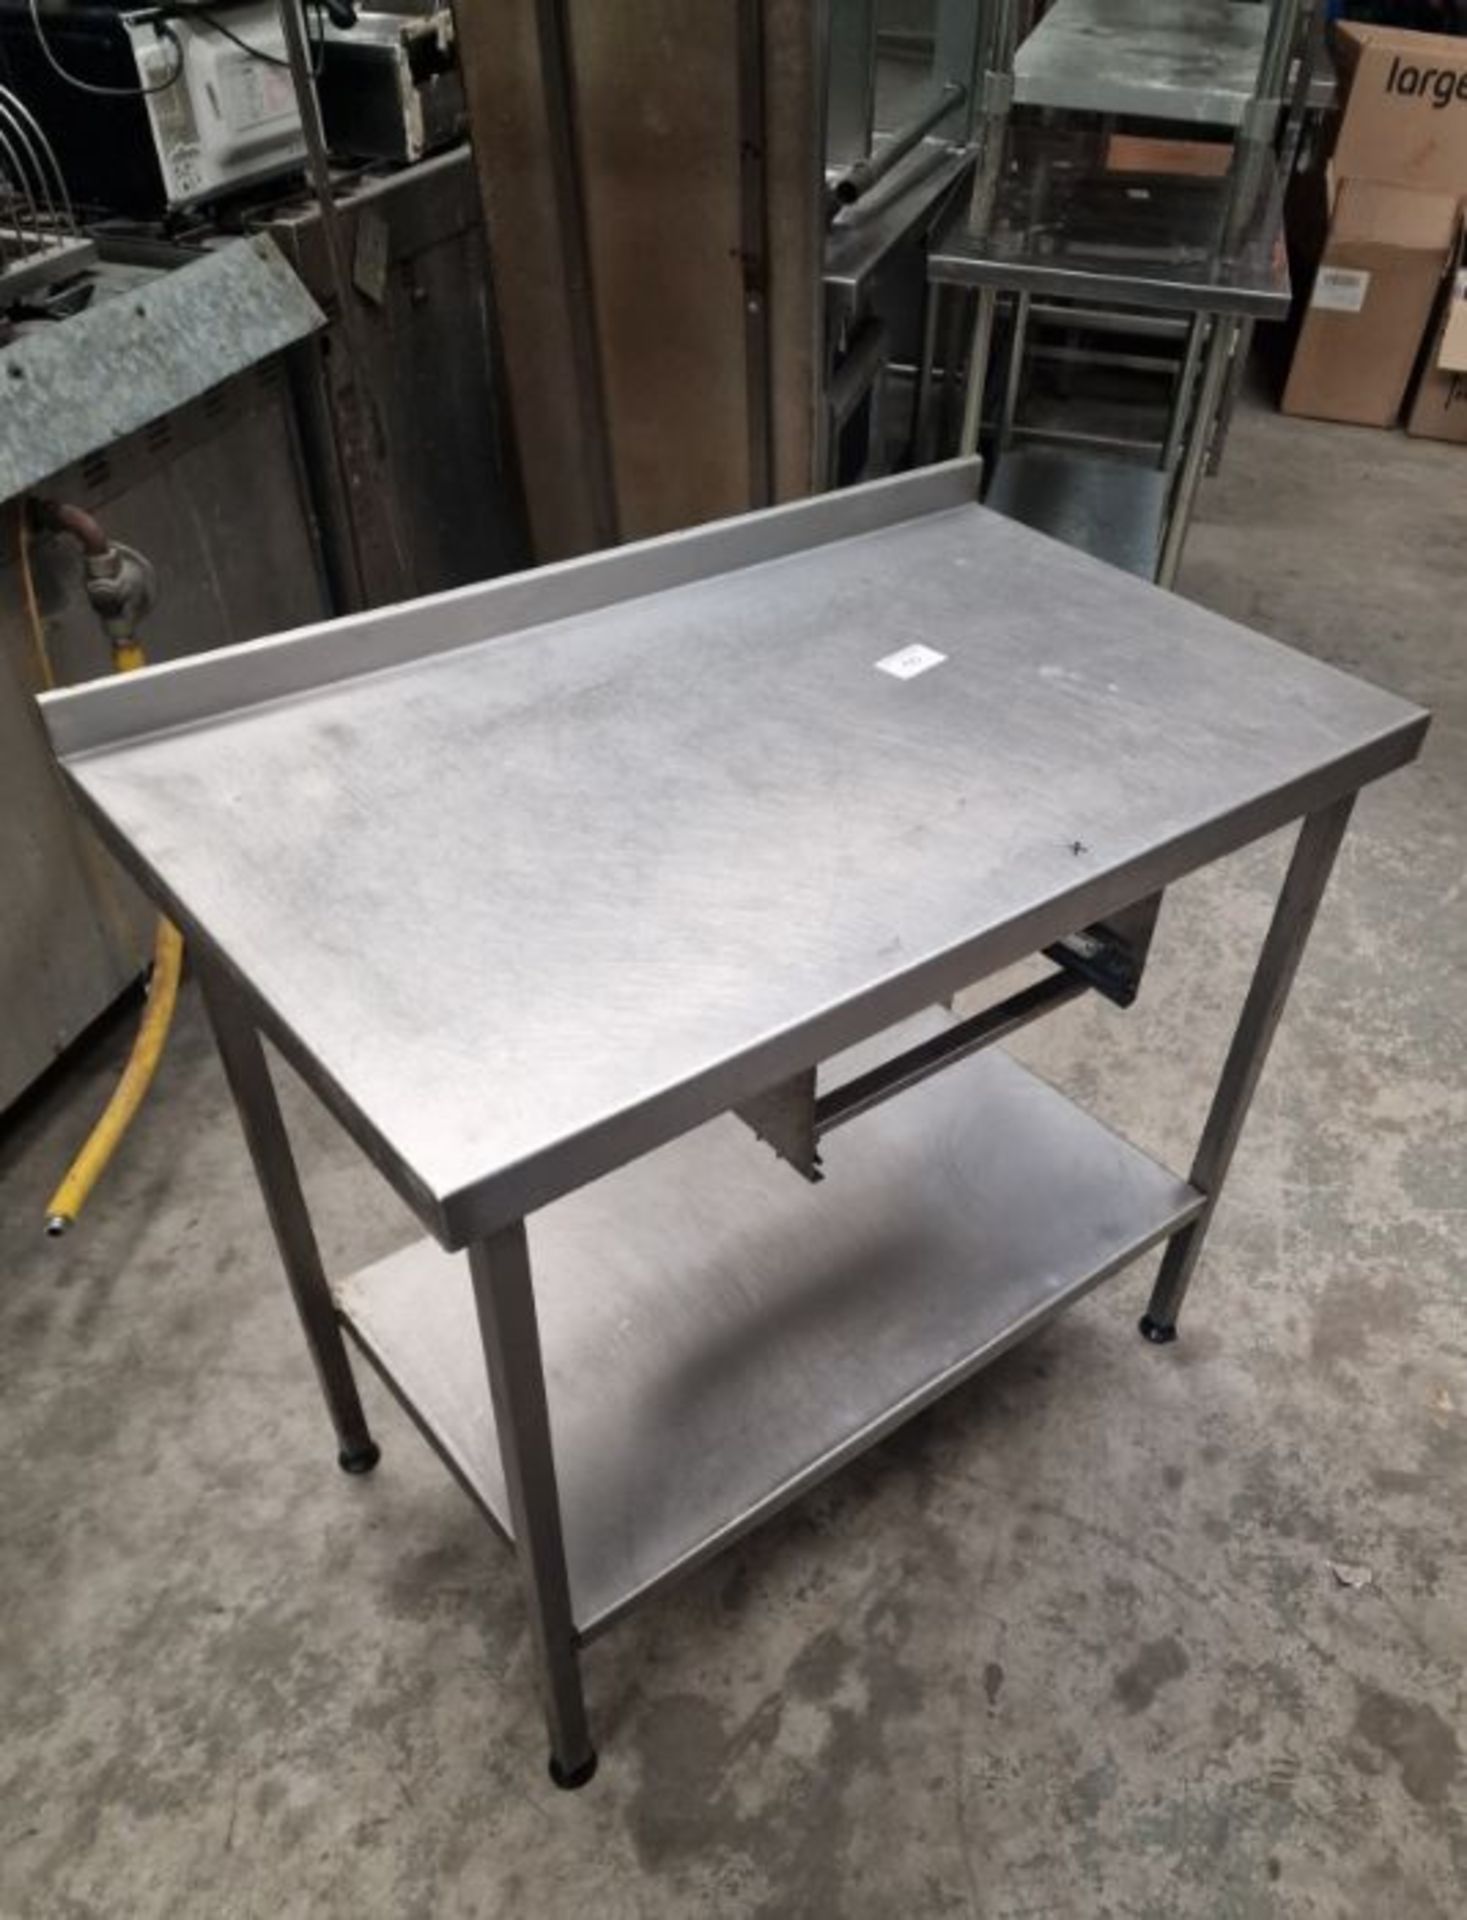 S/S table with undershelf.